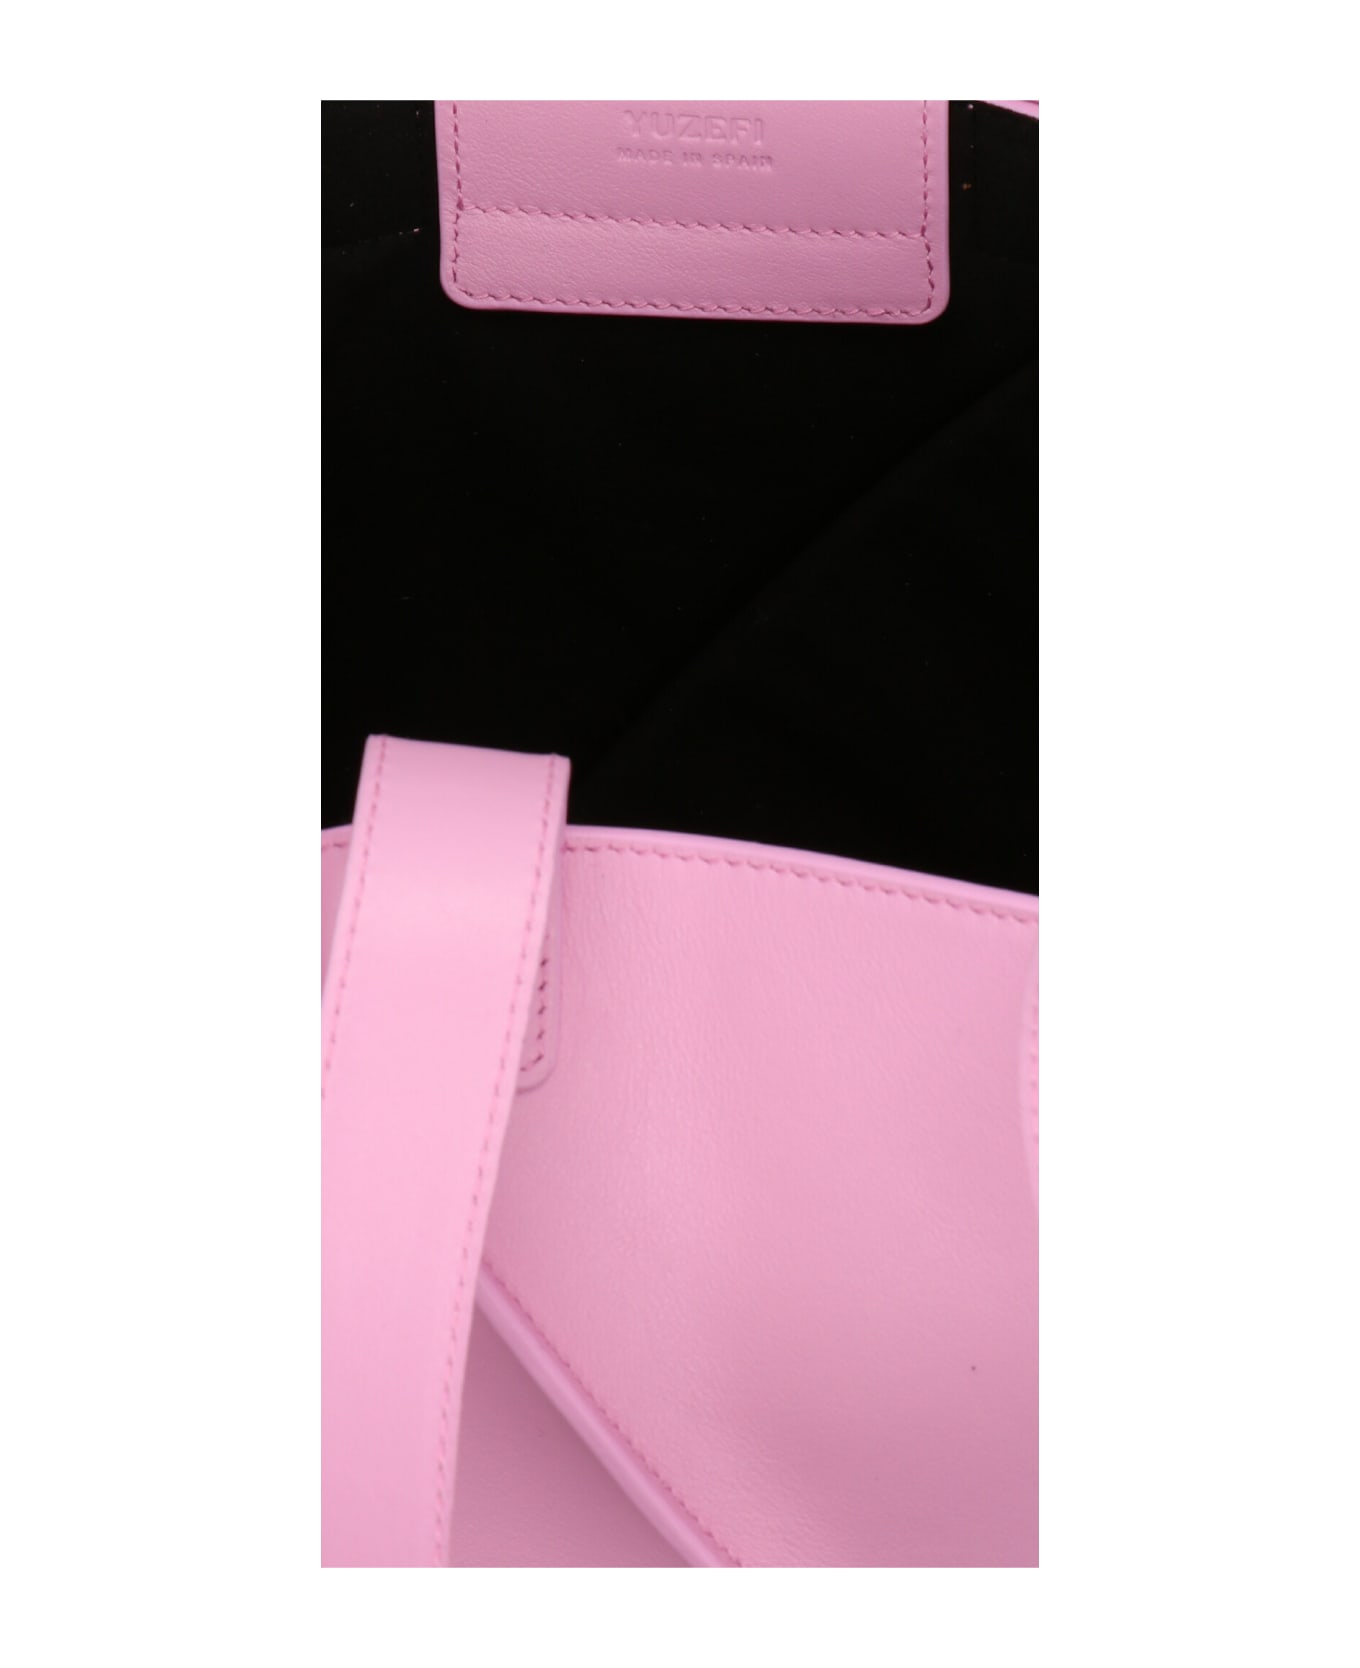 YUZEFI 'swirl Small' Shopping Bag - Pink